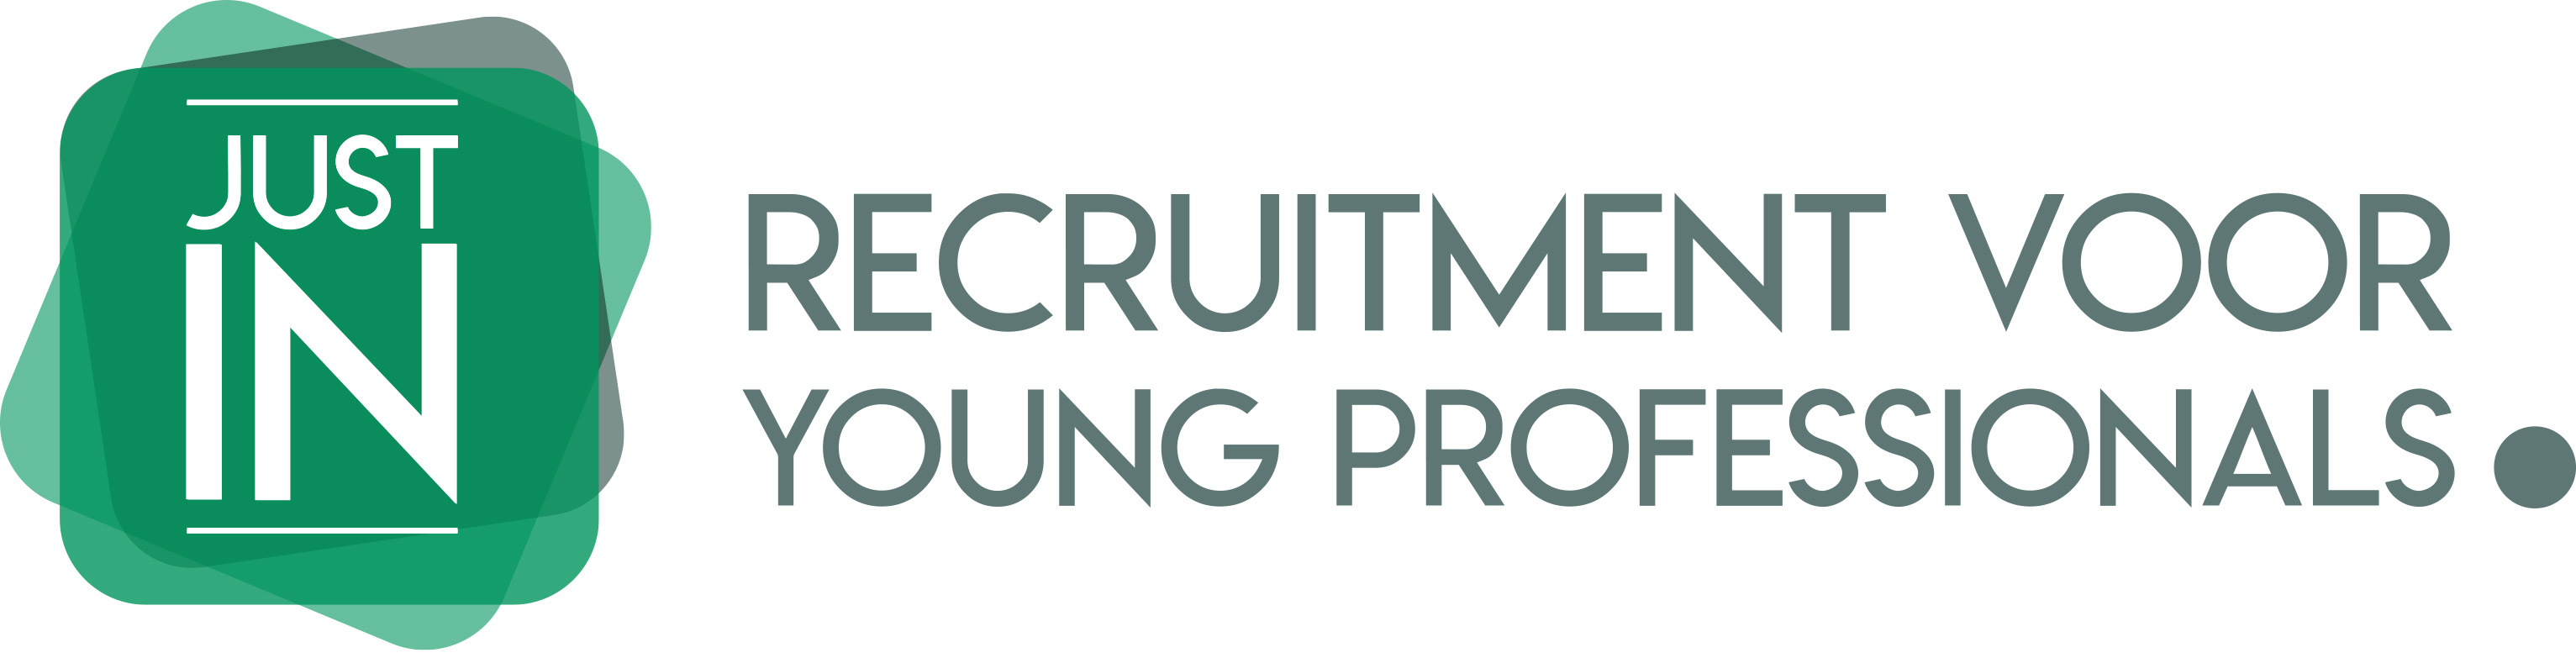 JUSTIN, recruitment voor young professionals